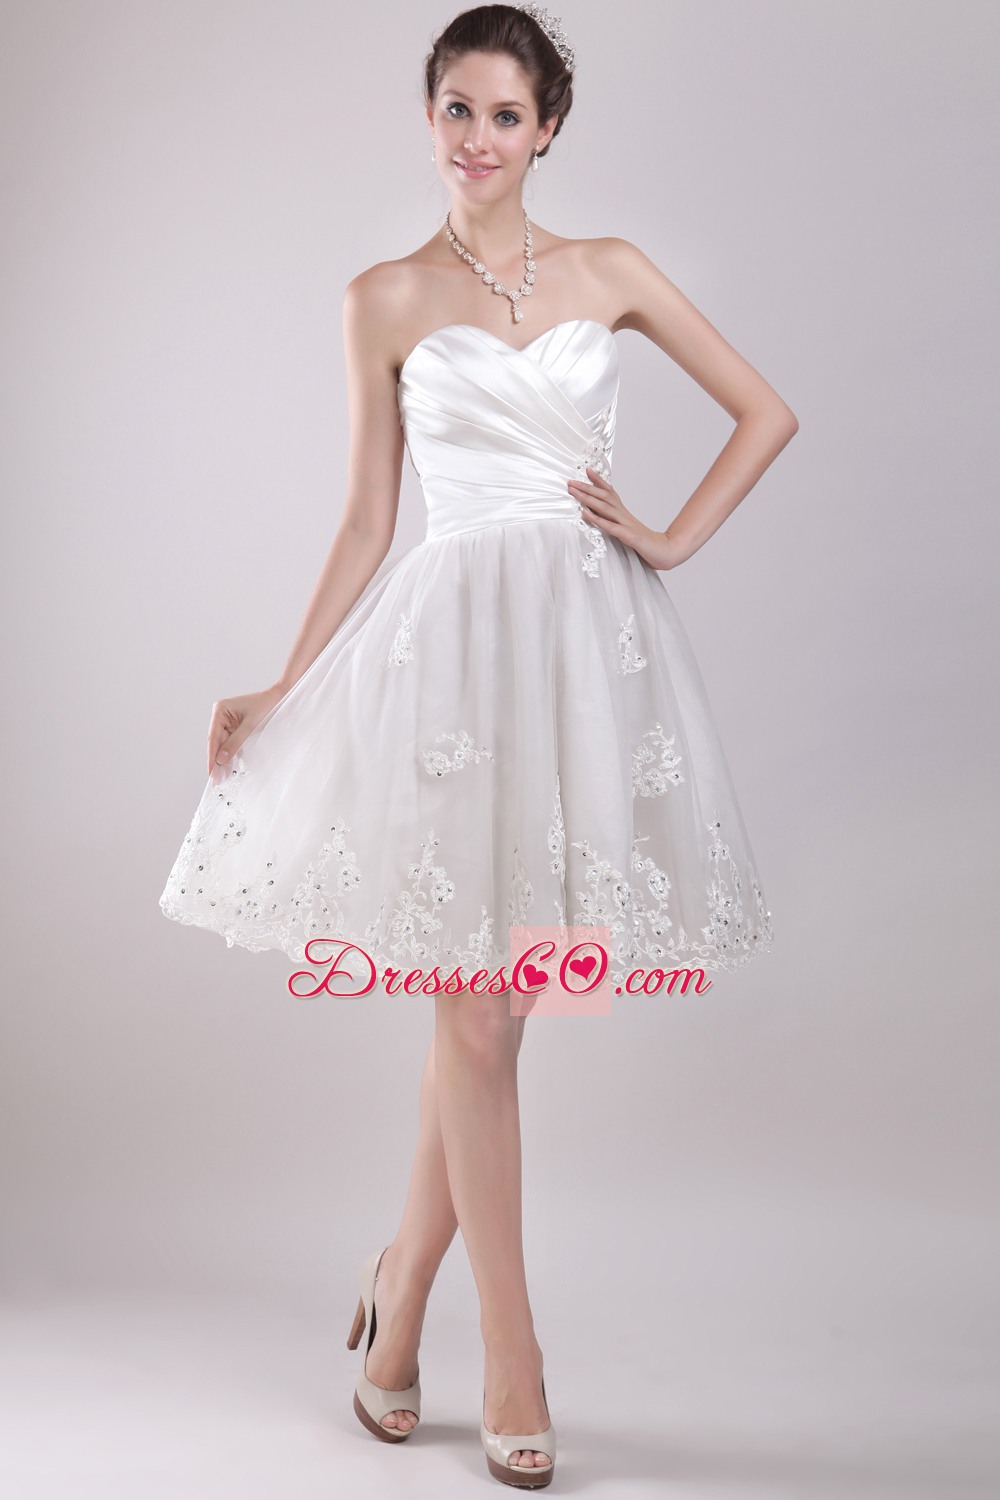 Sweet A-line/princess Knee-length Organza Appliques Wedding Dress